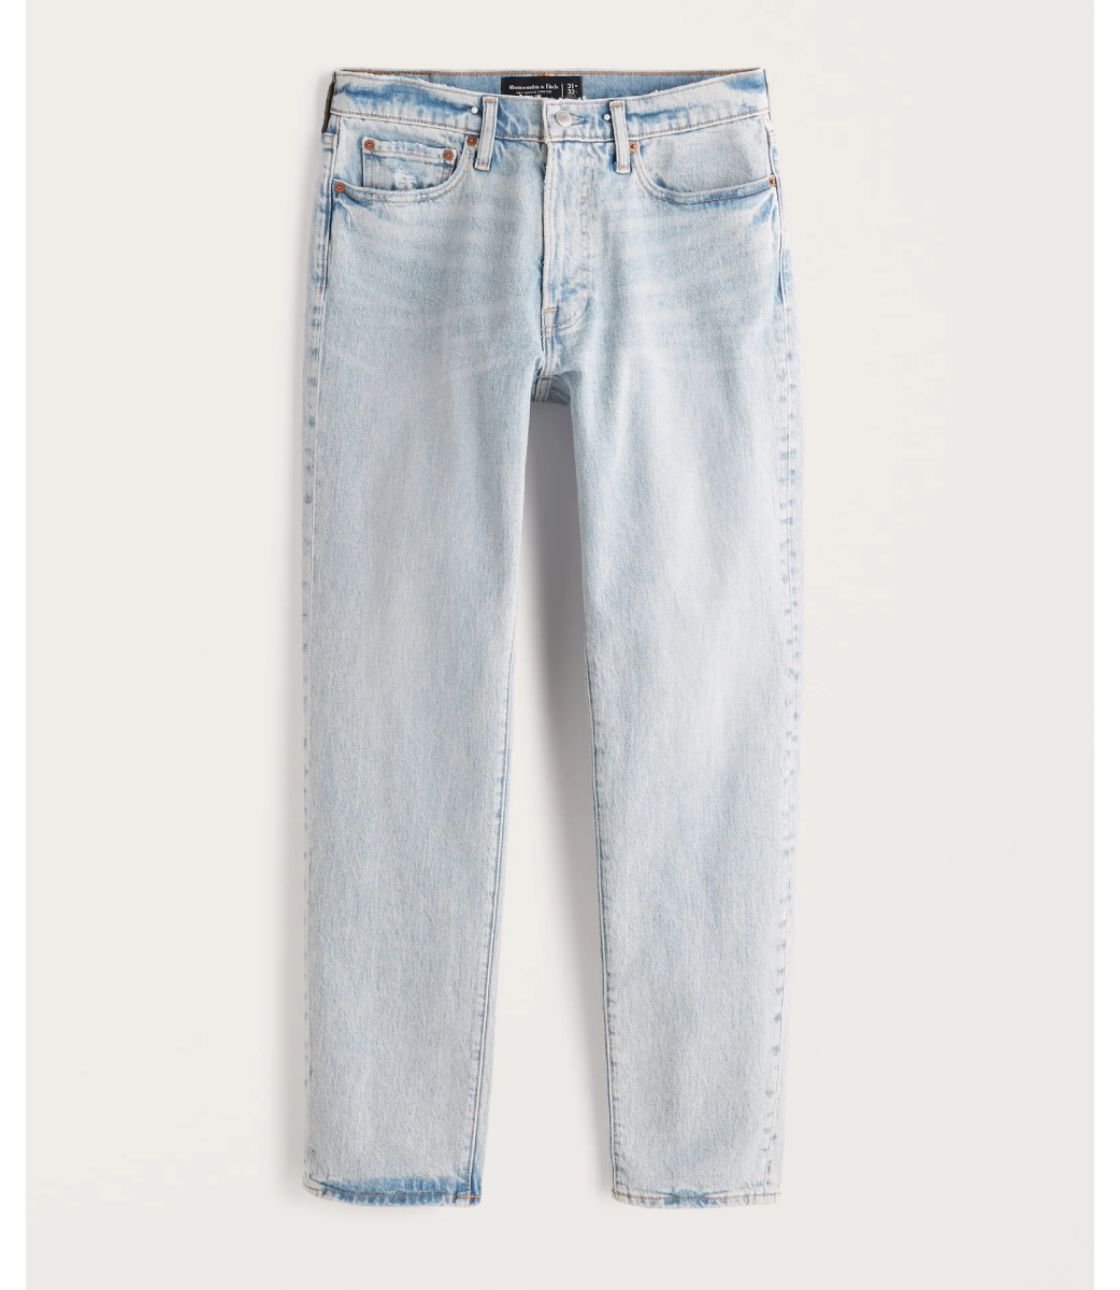 Quần Jeans Abercrombie & Fitch Slim 38